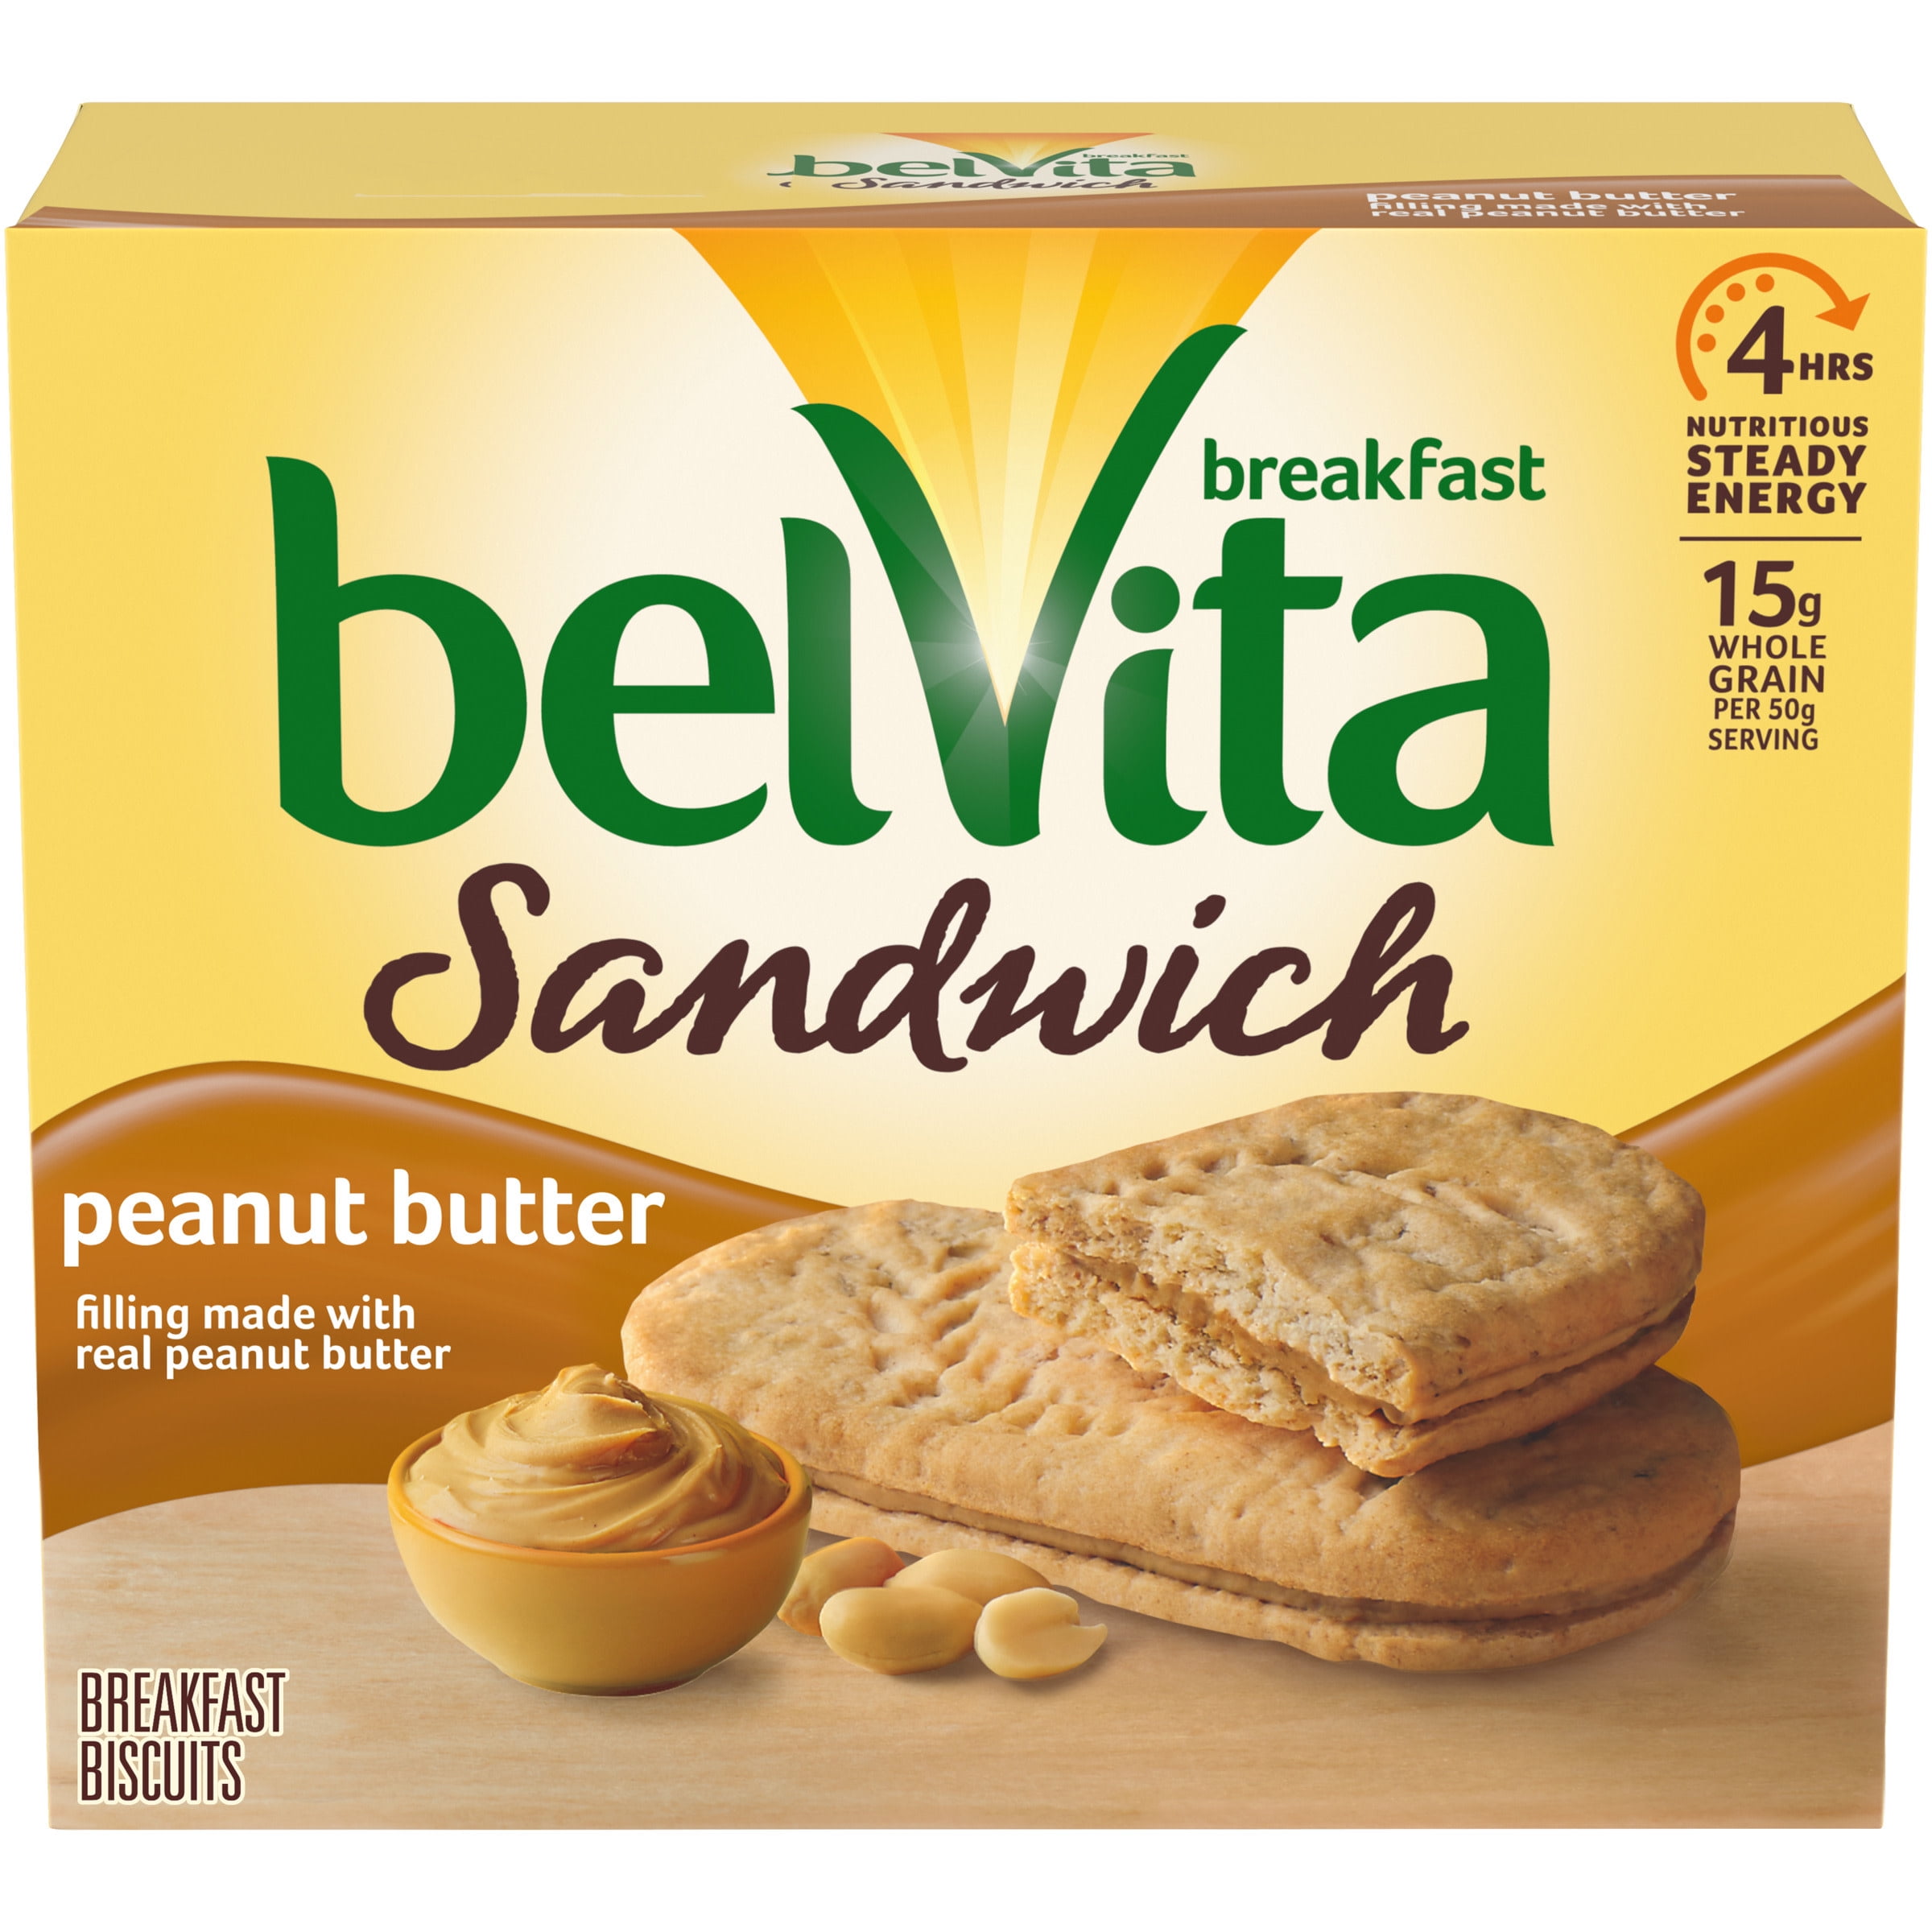 belVita Sandwich Peanut Butter Breakfast Biscuits, 5 Packs (2 Sandwiches Per Pack)